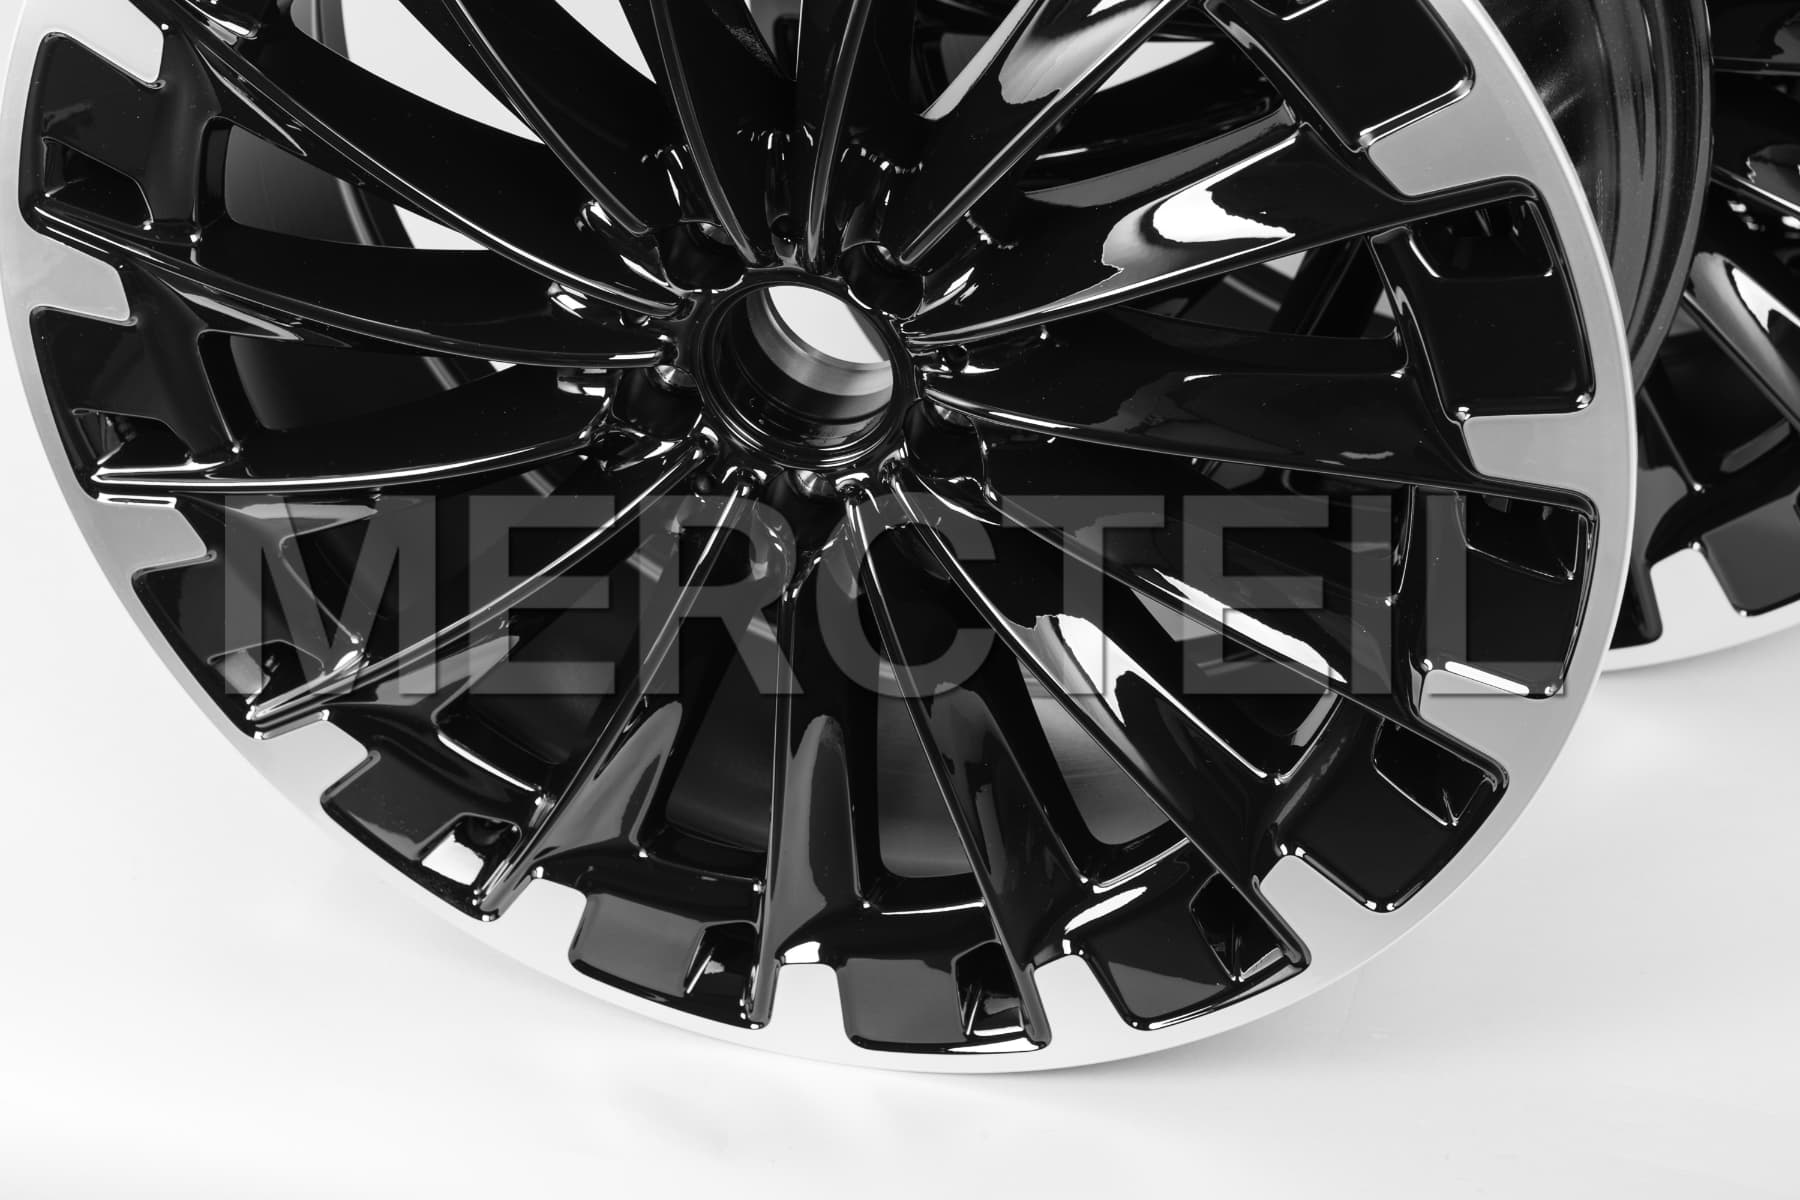 EQS-Class SUV AMG Multi-Spoke Design Alloy Wheels Black X296 Genuine Mercedes-AMG (Part number: A29640118007X23)